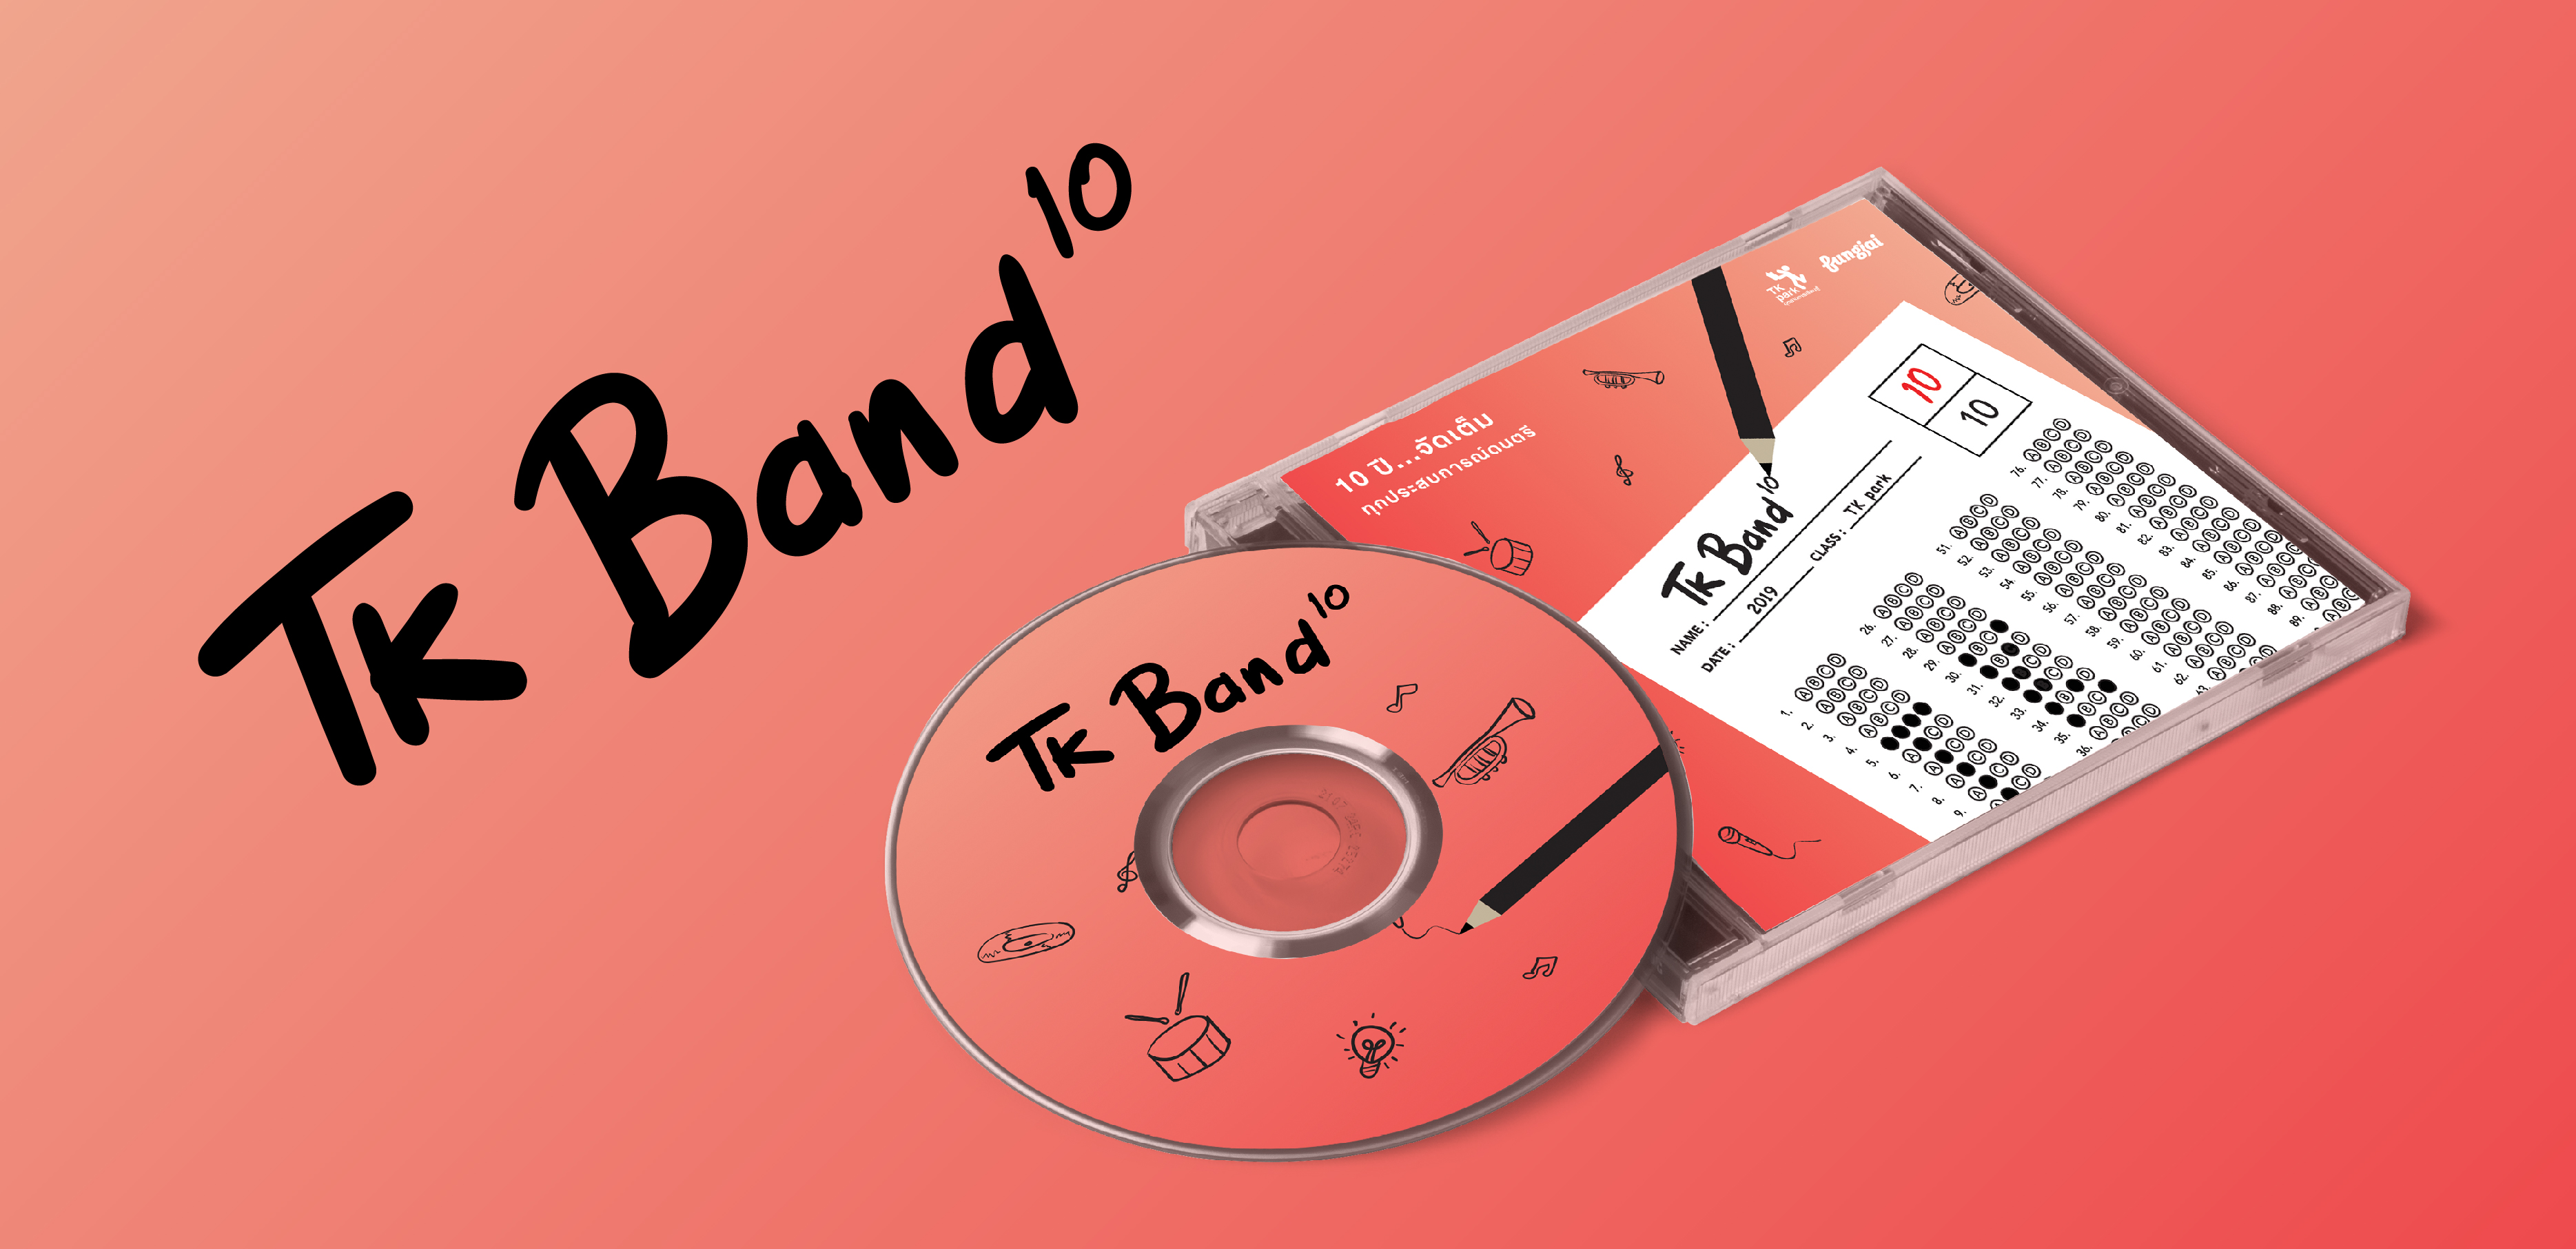 TKBand10-Album-897x435-01.jpg